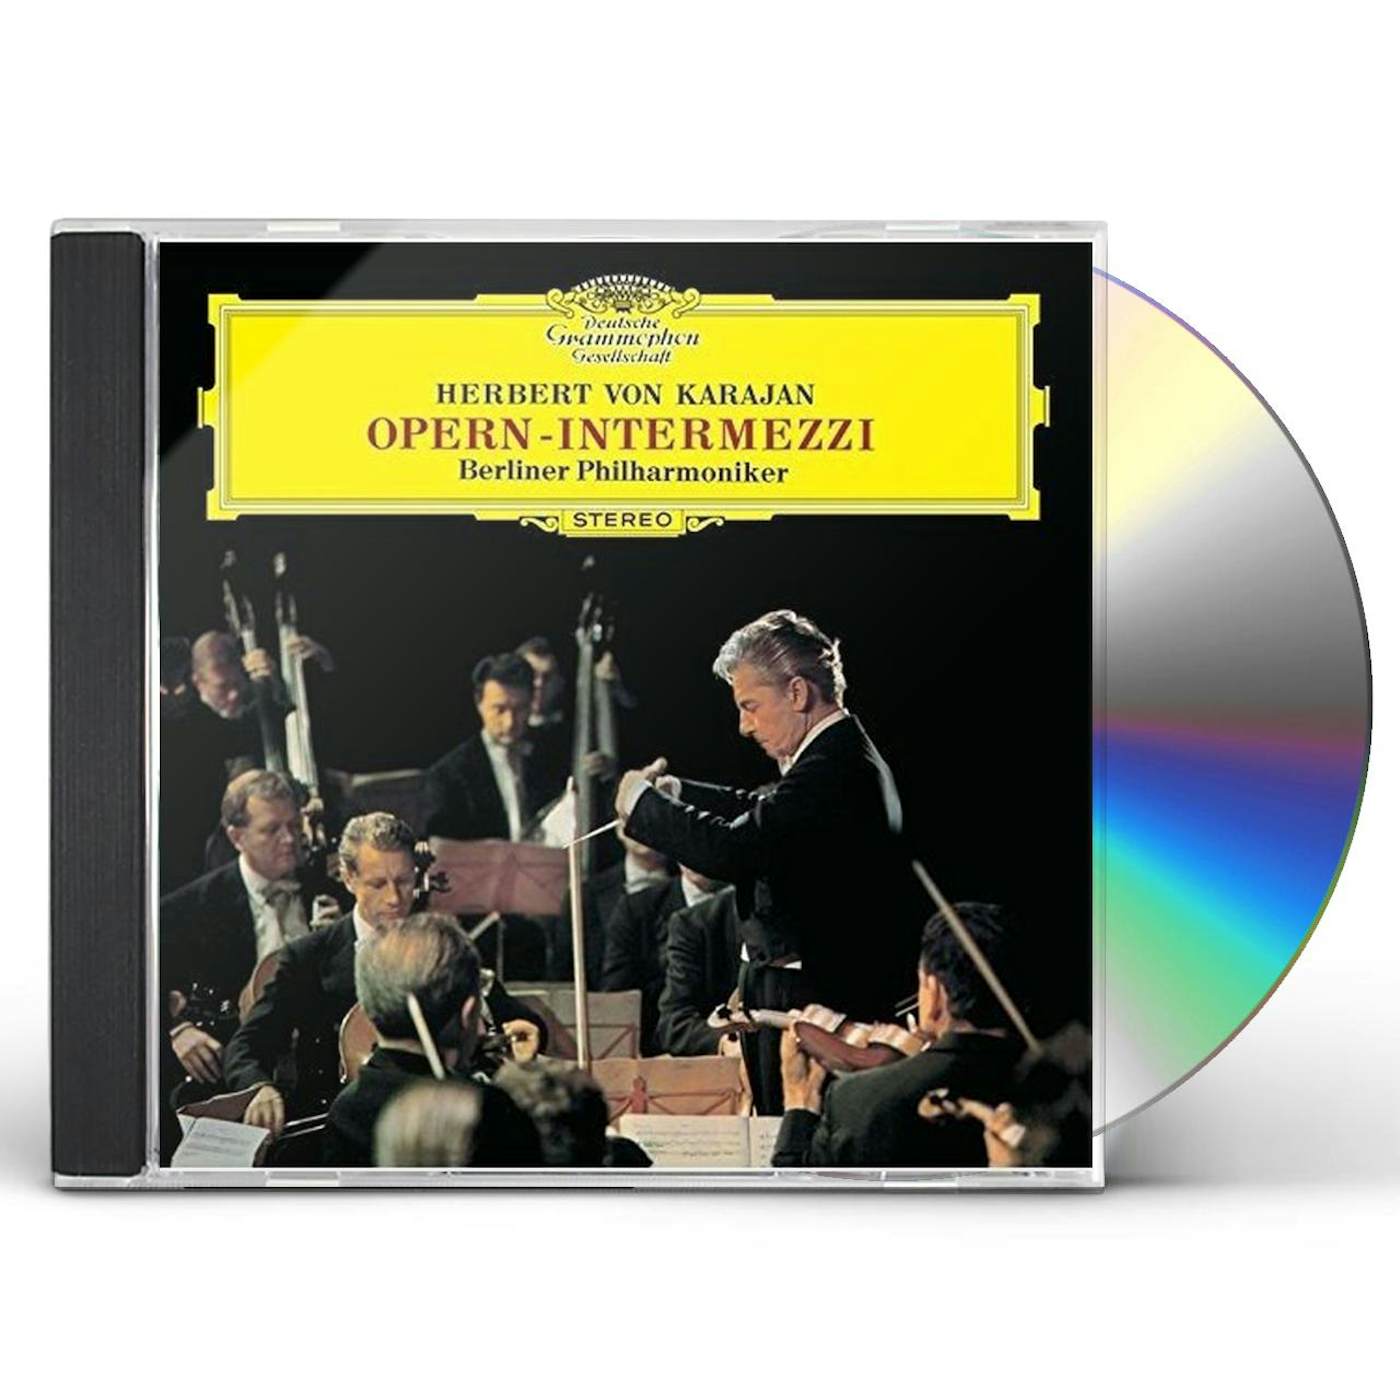 Herbert von Karajan OPERN-INTERMEZZI CD